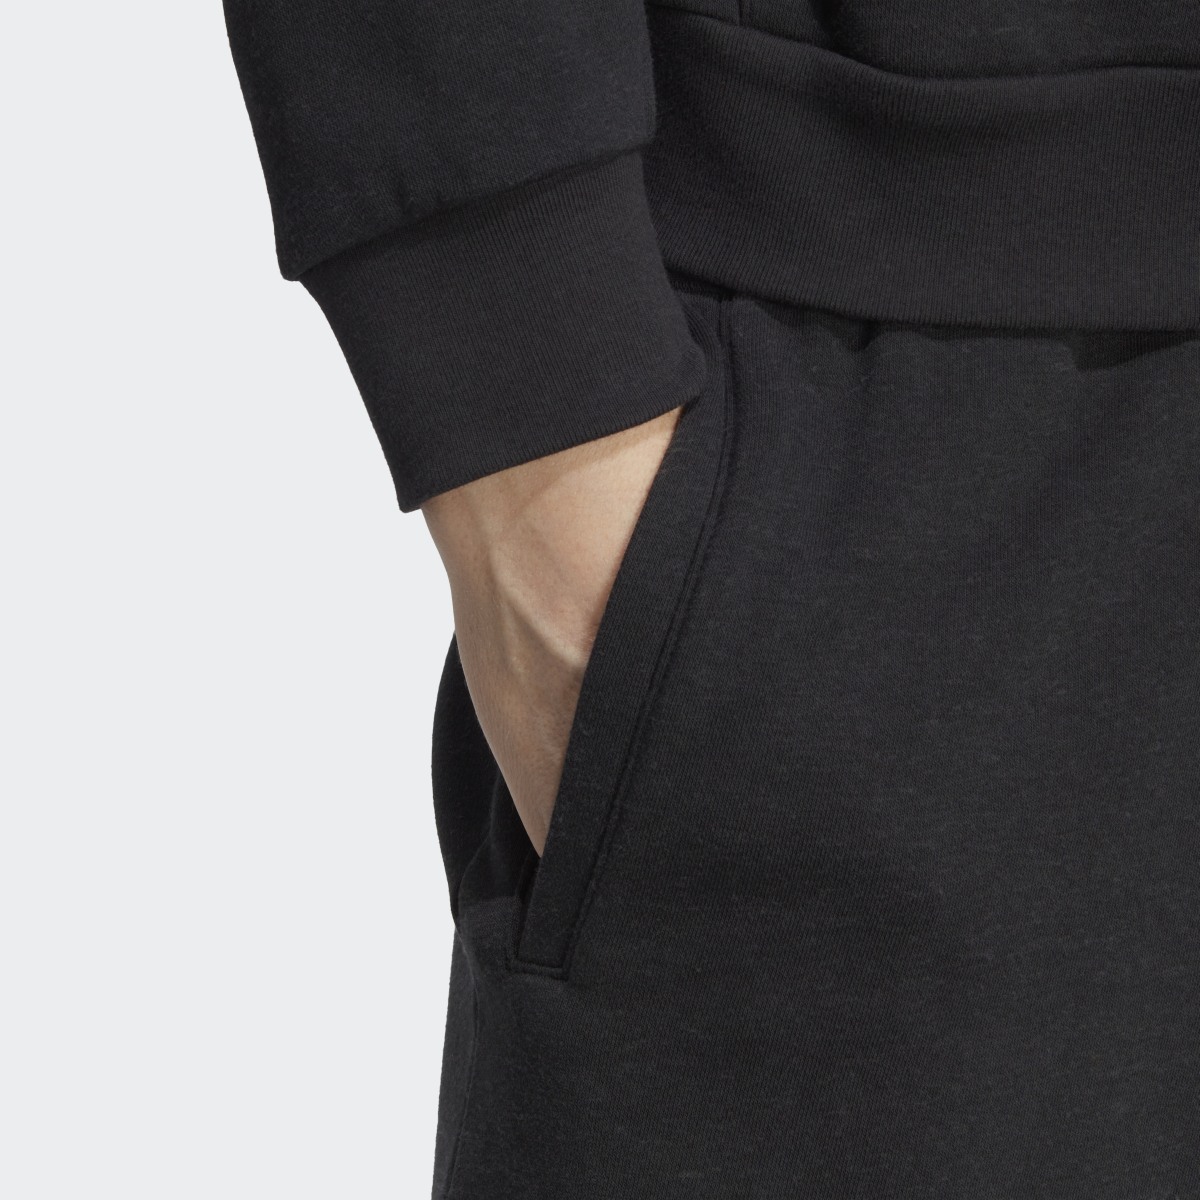 Adidas Essentials+ Made With Hemp Shorts. 7